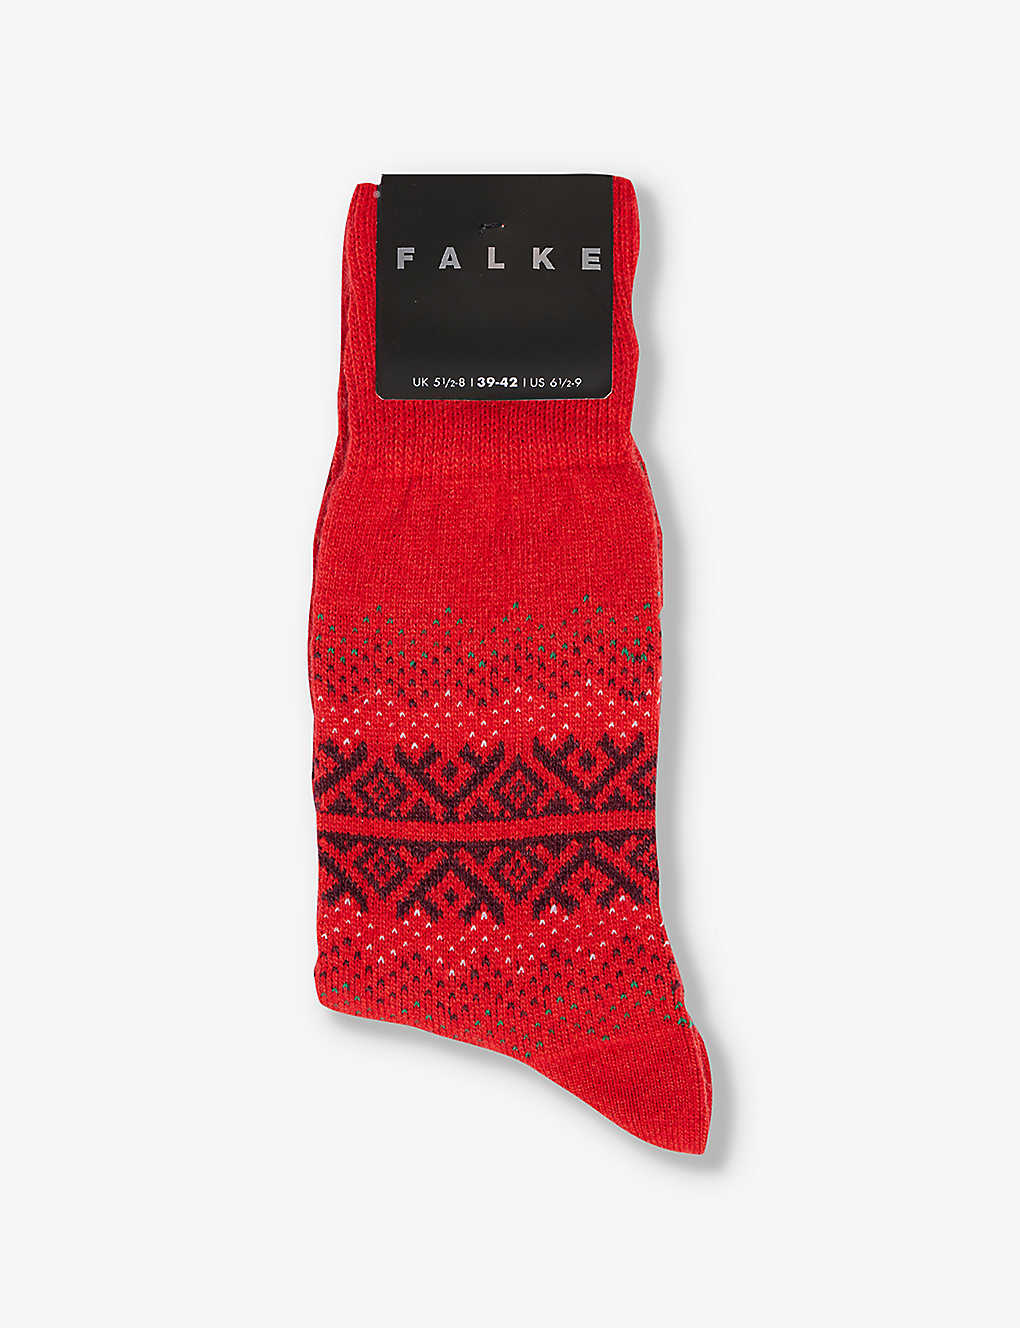 Falke Mens Red Inverness Patterned Knitted Socks